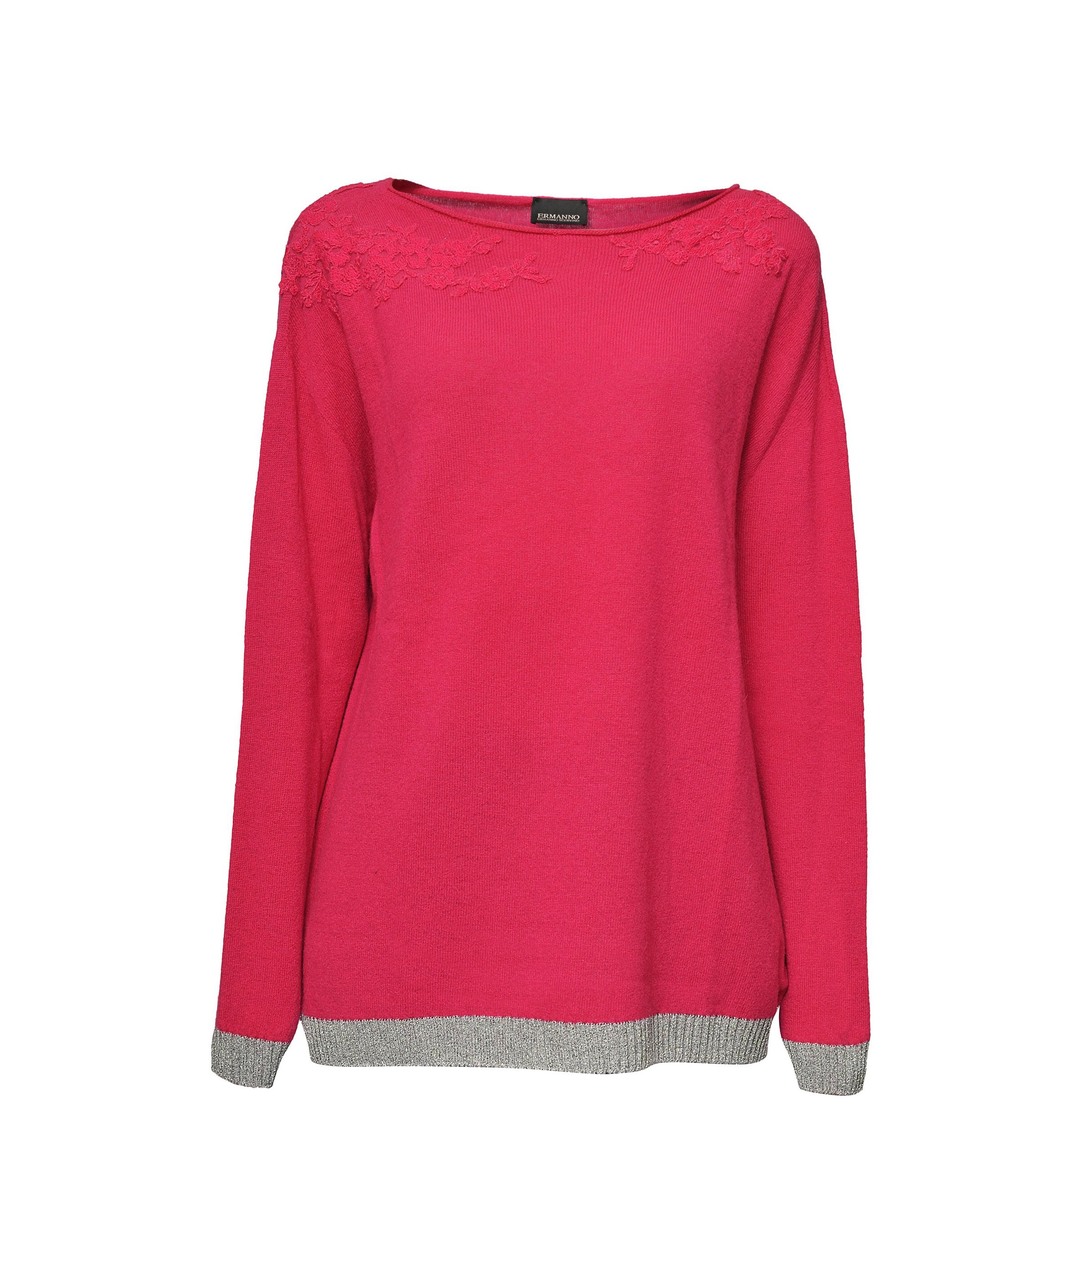 ERMANNO SCERVINO Розовый шерстяной джемпер / свитер, фото 1